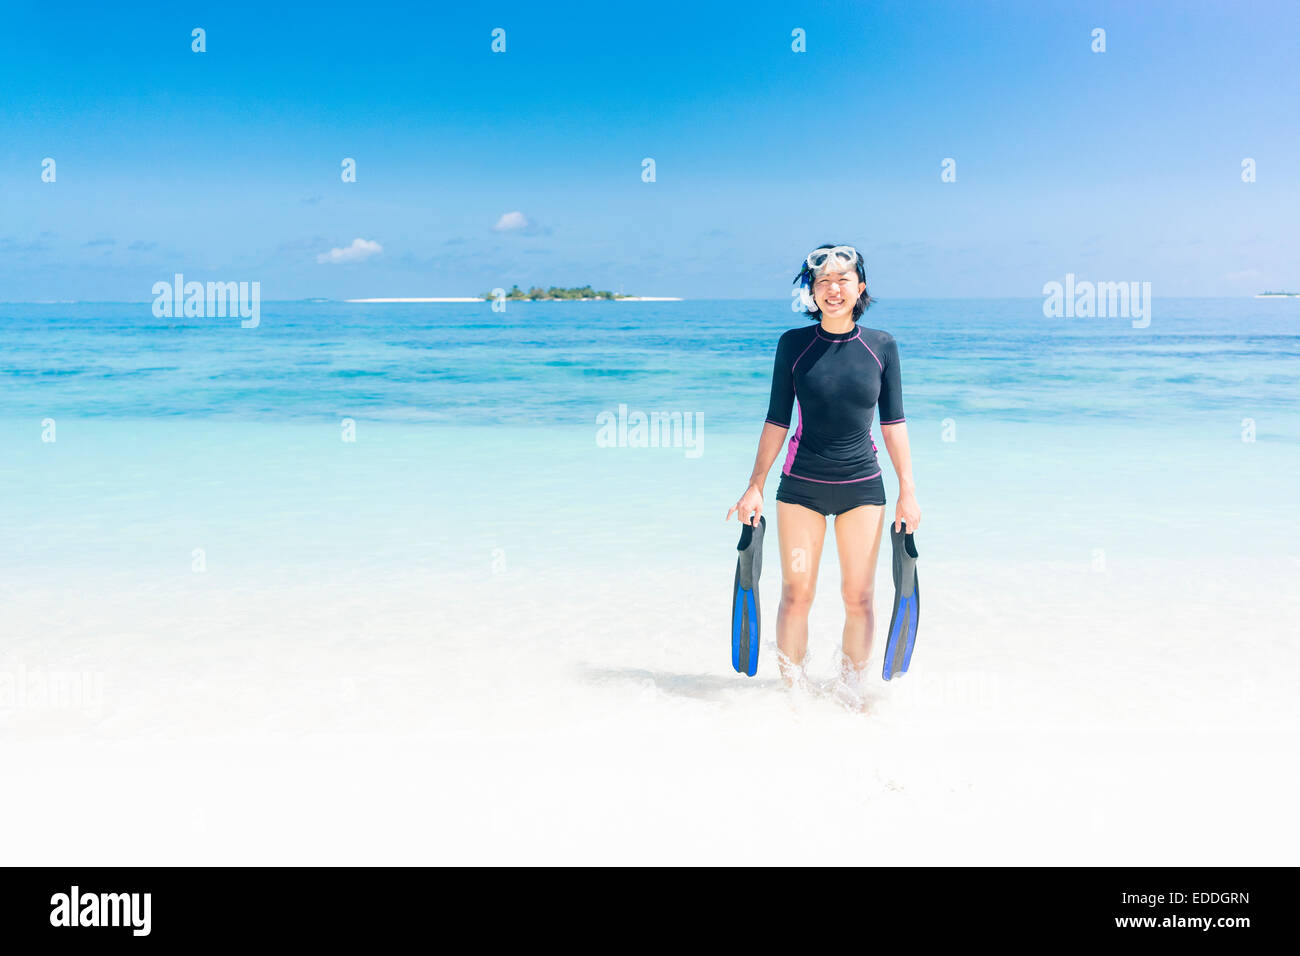 Les Maldives, Ari Atoll, jeune femme diver venant hors de l'eau Banque D'Images